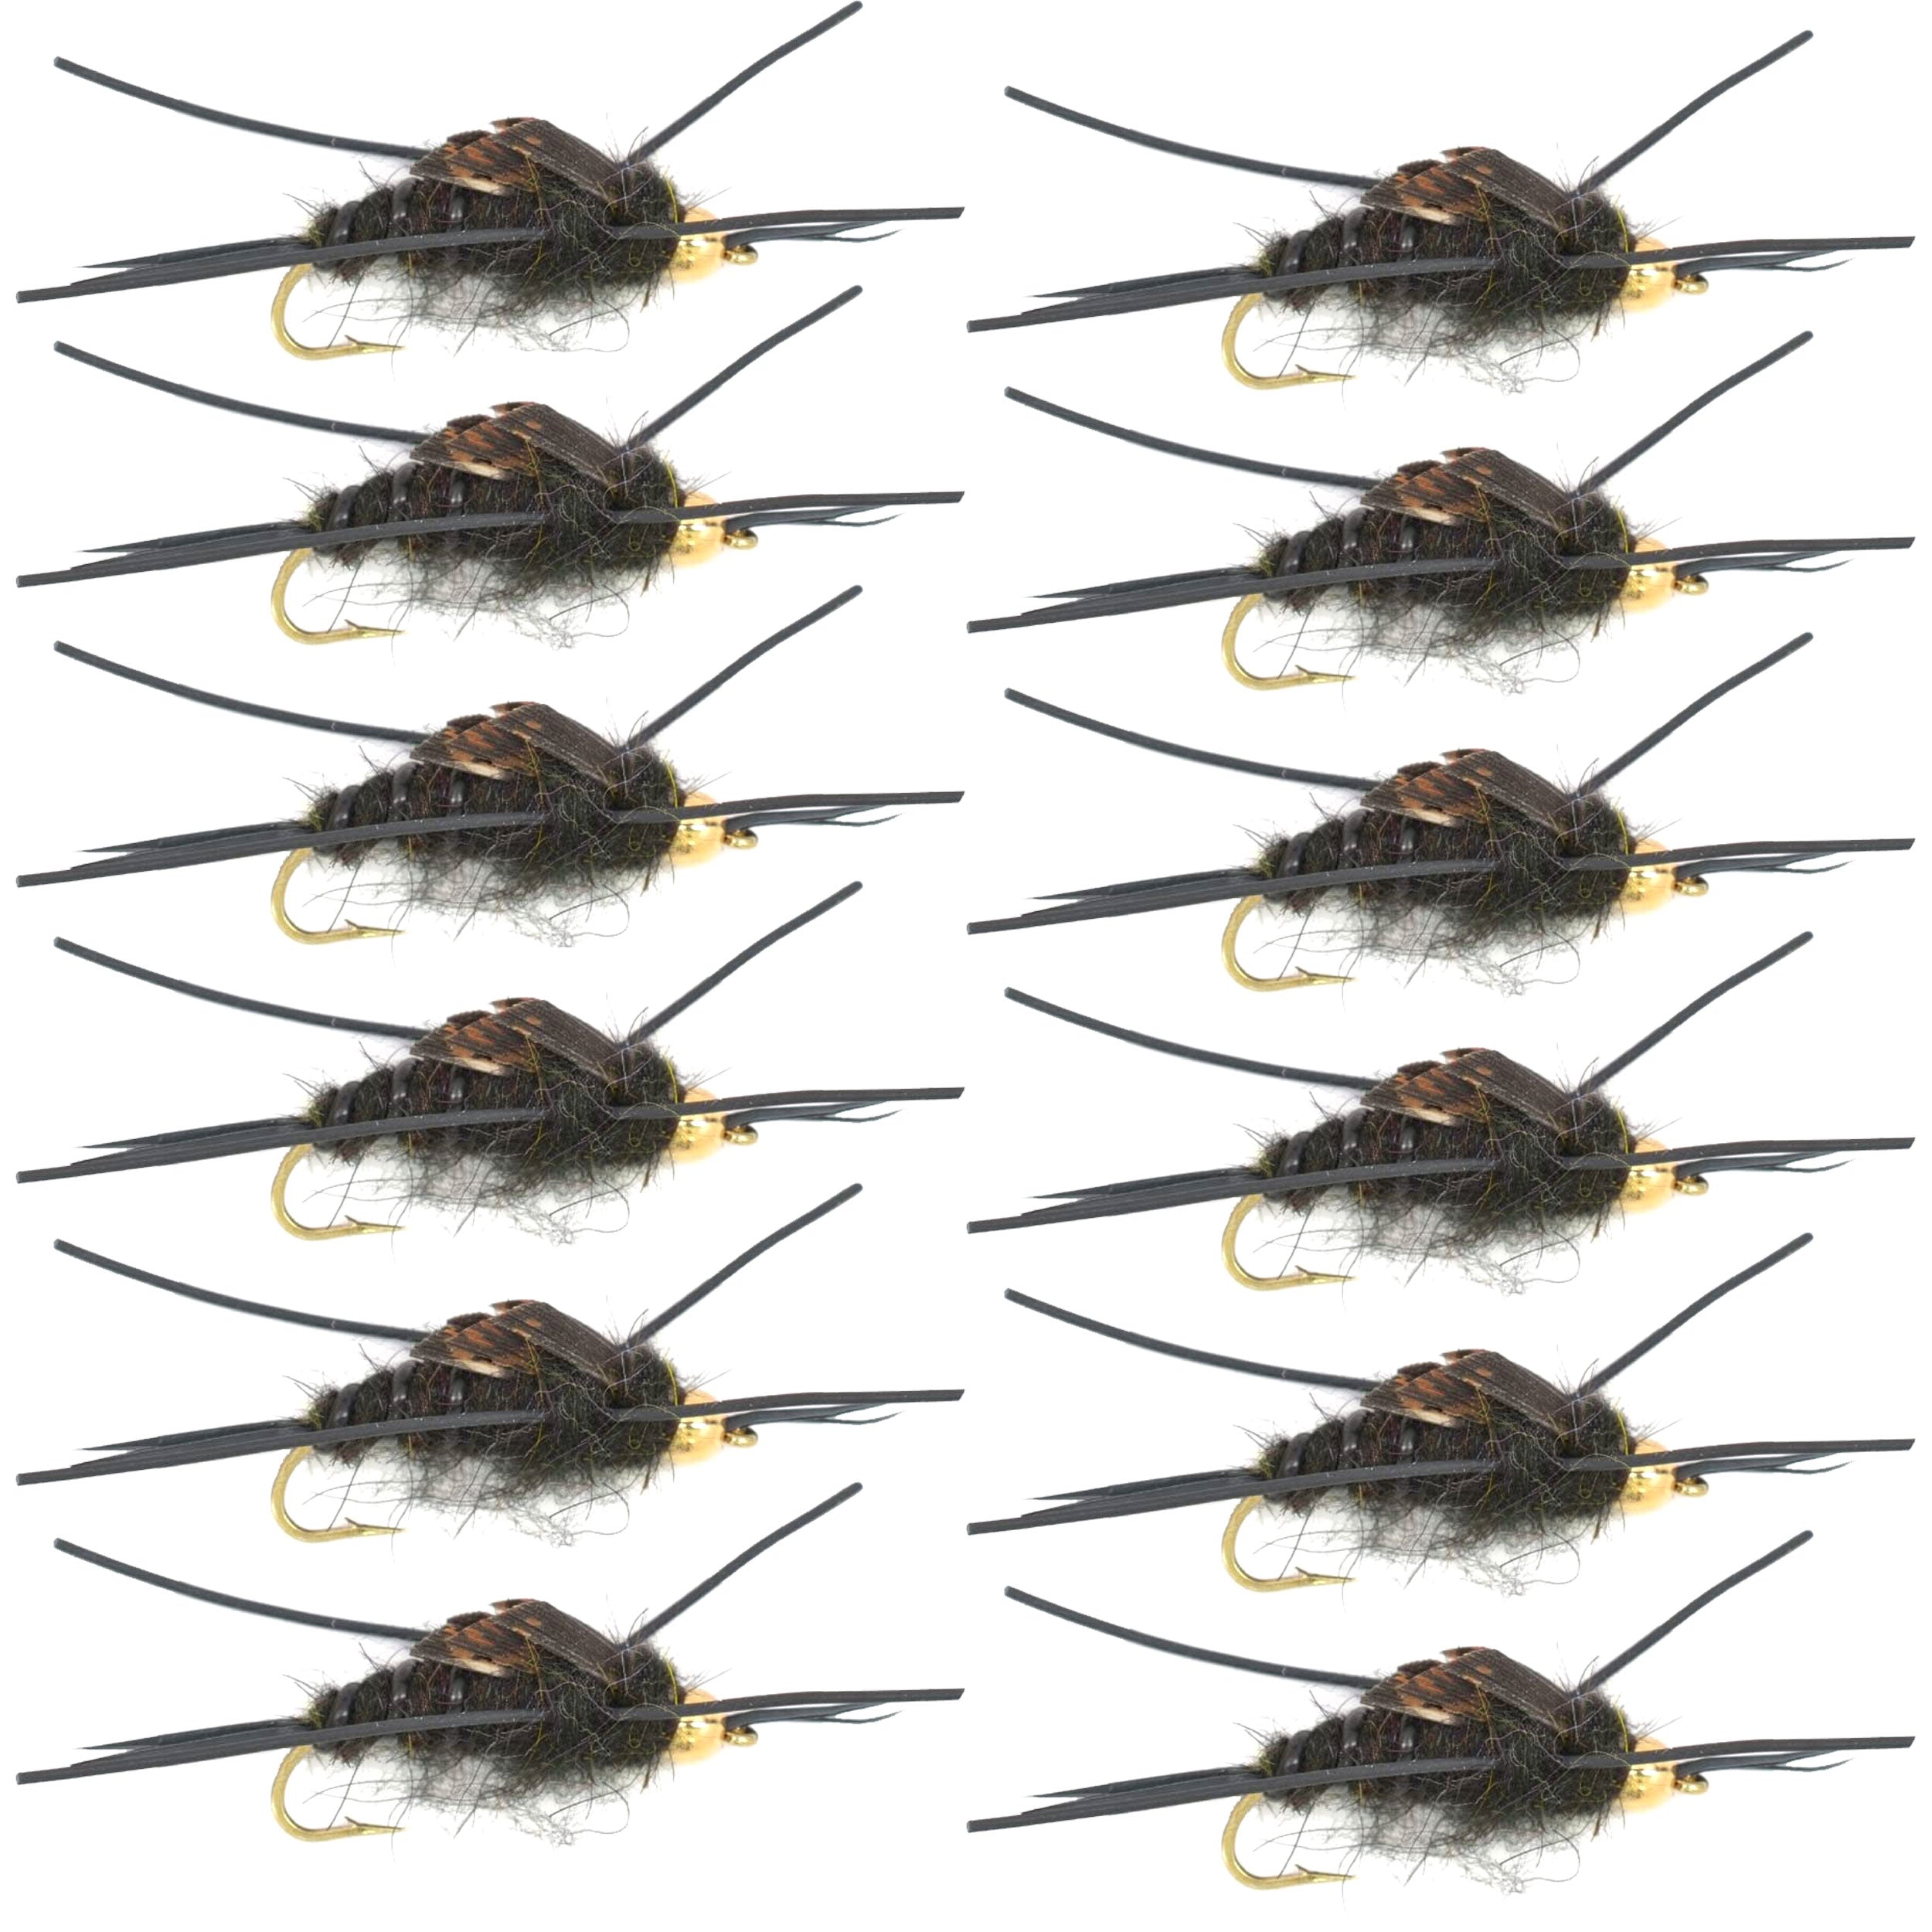 Tungsten Bead Kaufmann's Black Stone Fly with Rubber Legs - Stonefly Wet Fly - 1 Dozen Flies Hook Size 4